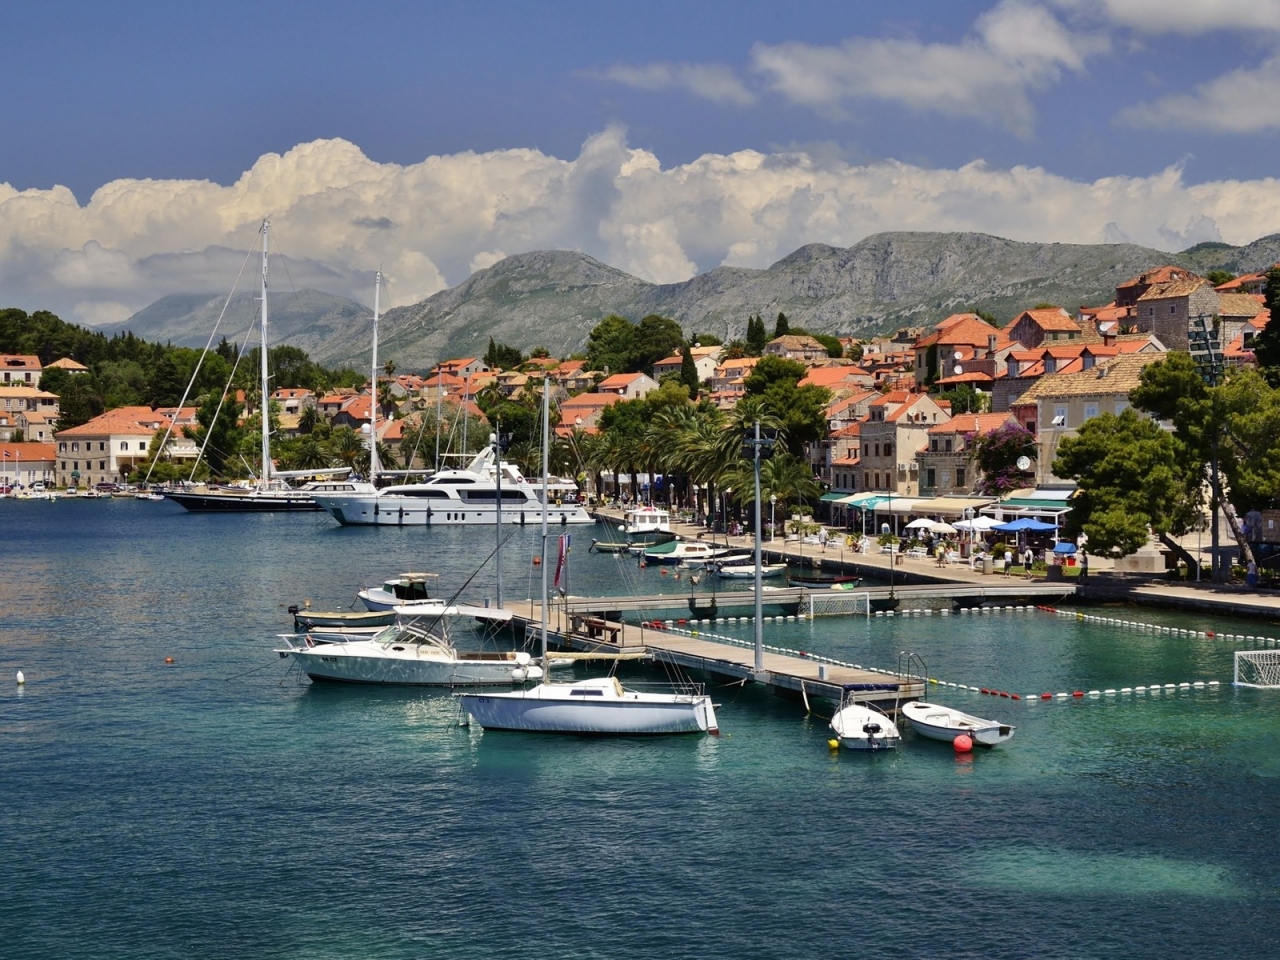 Croatia Port View for 1280 x 960 resolution